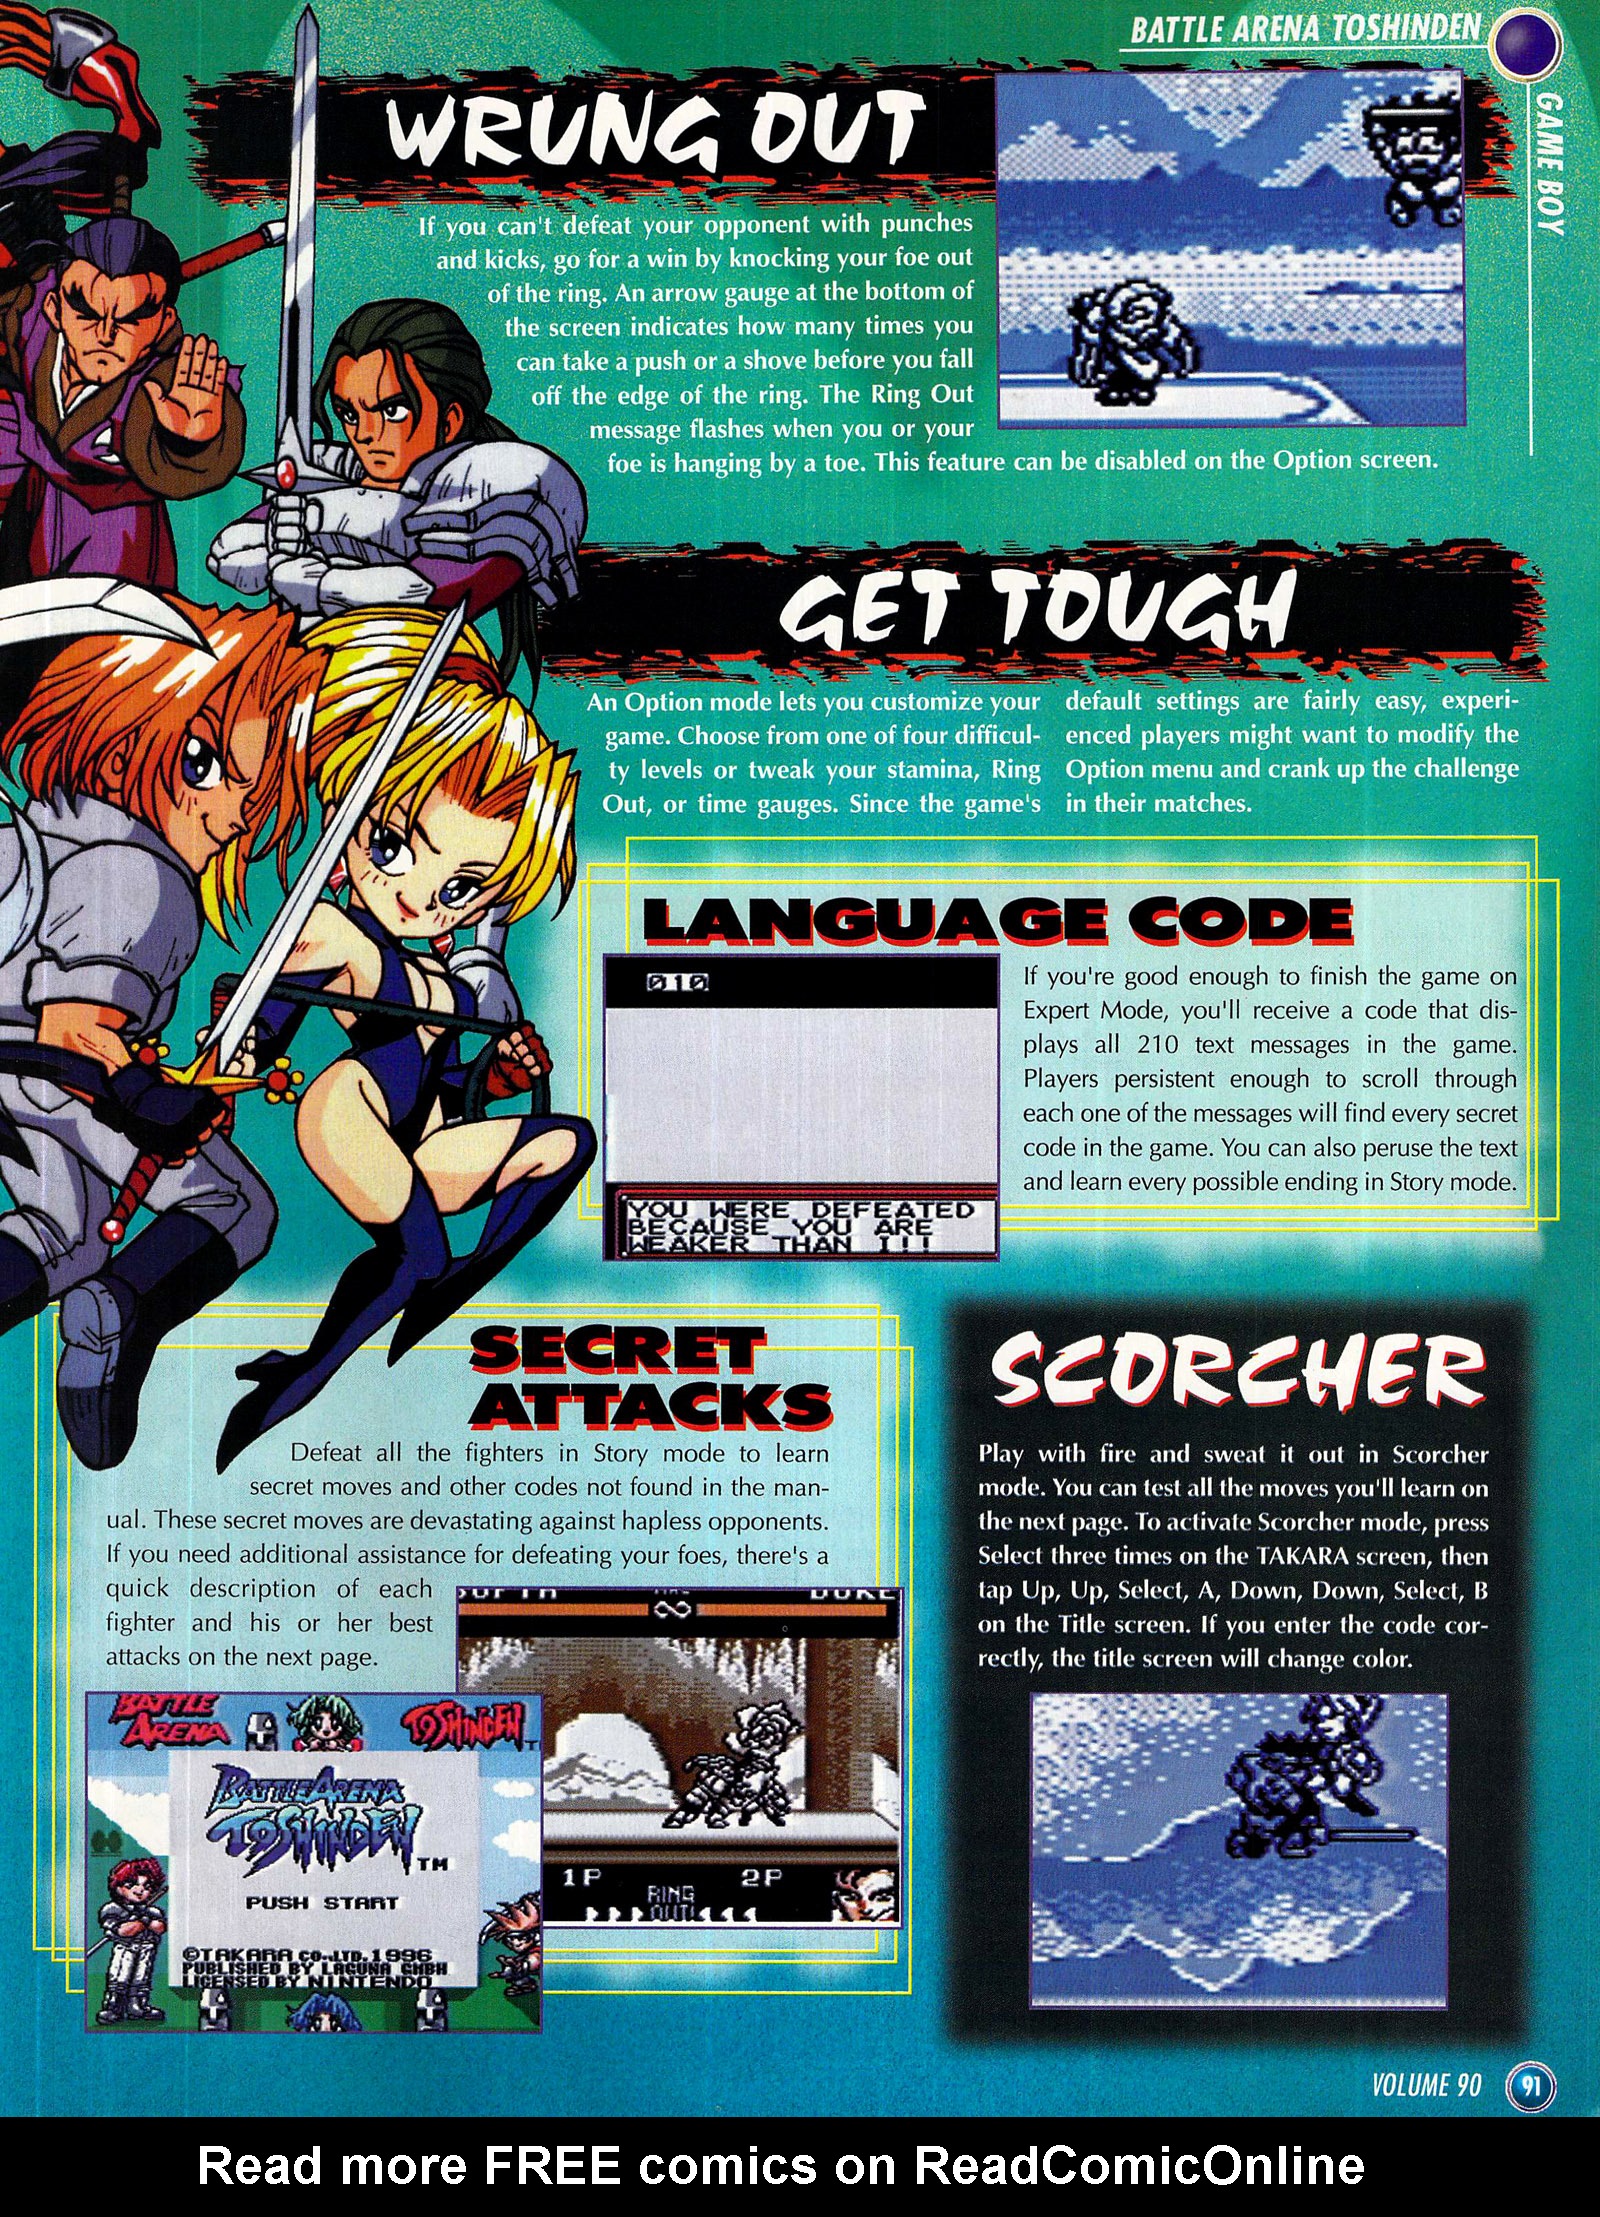 Read online Nintendo Power comic -  Issue #90 - 91